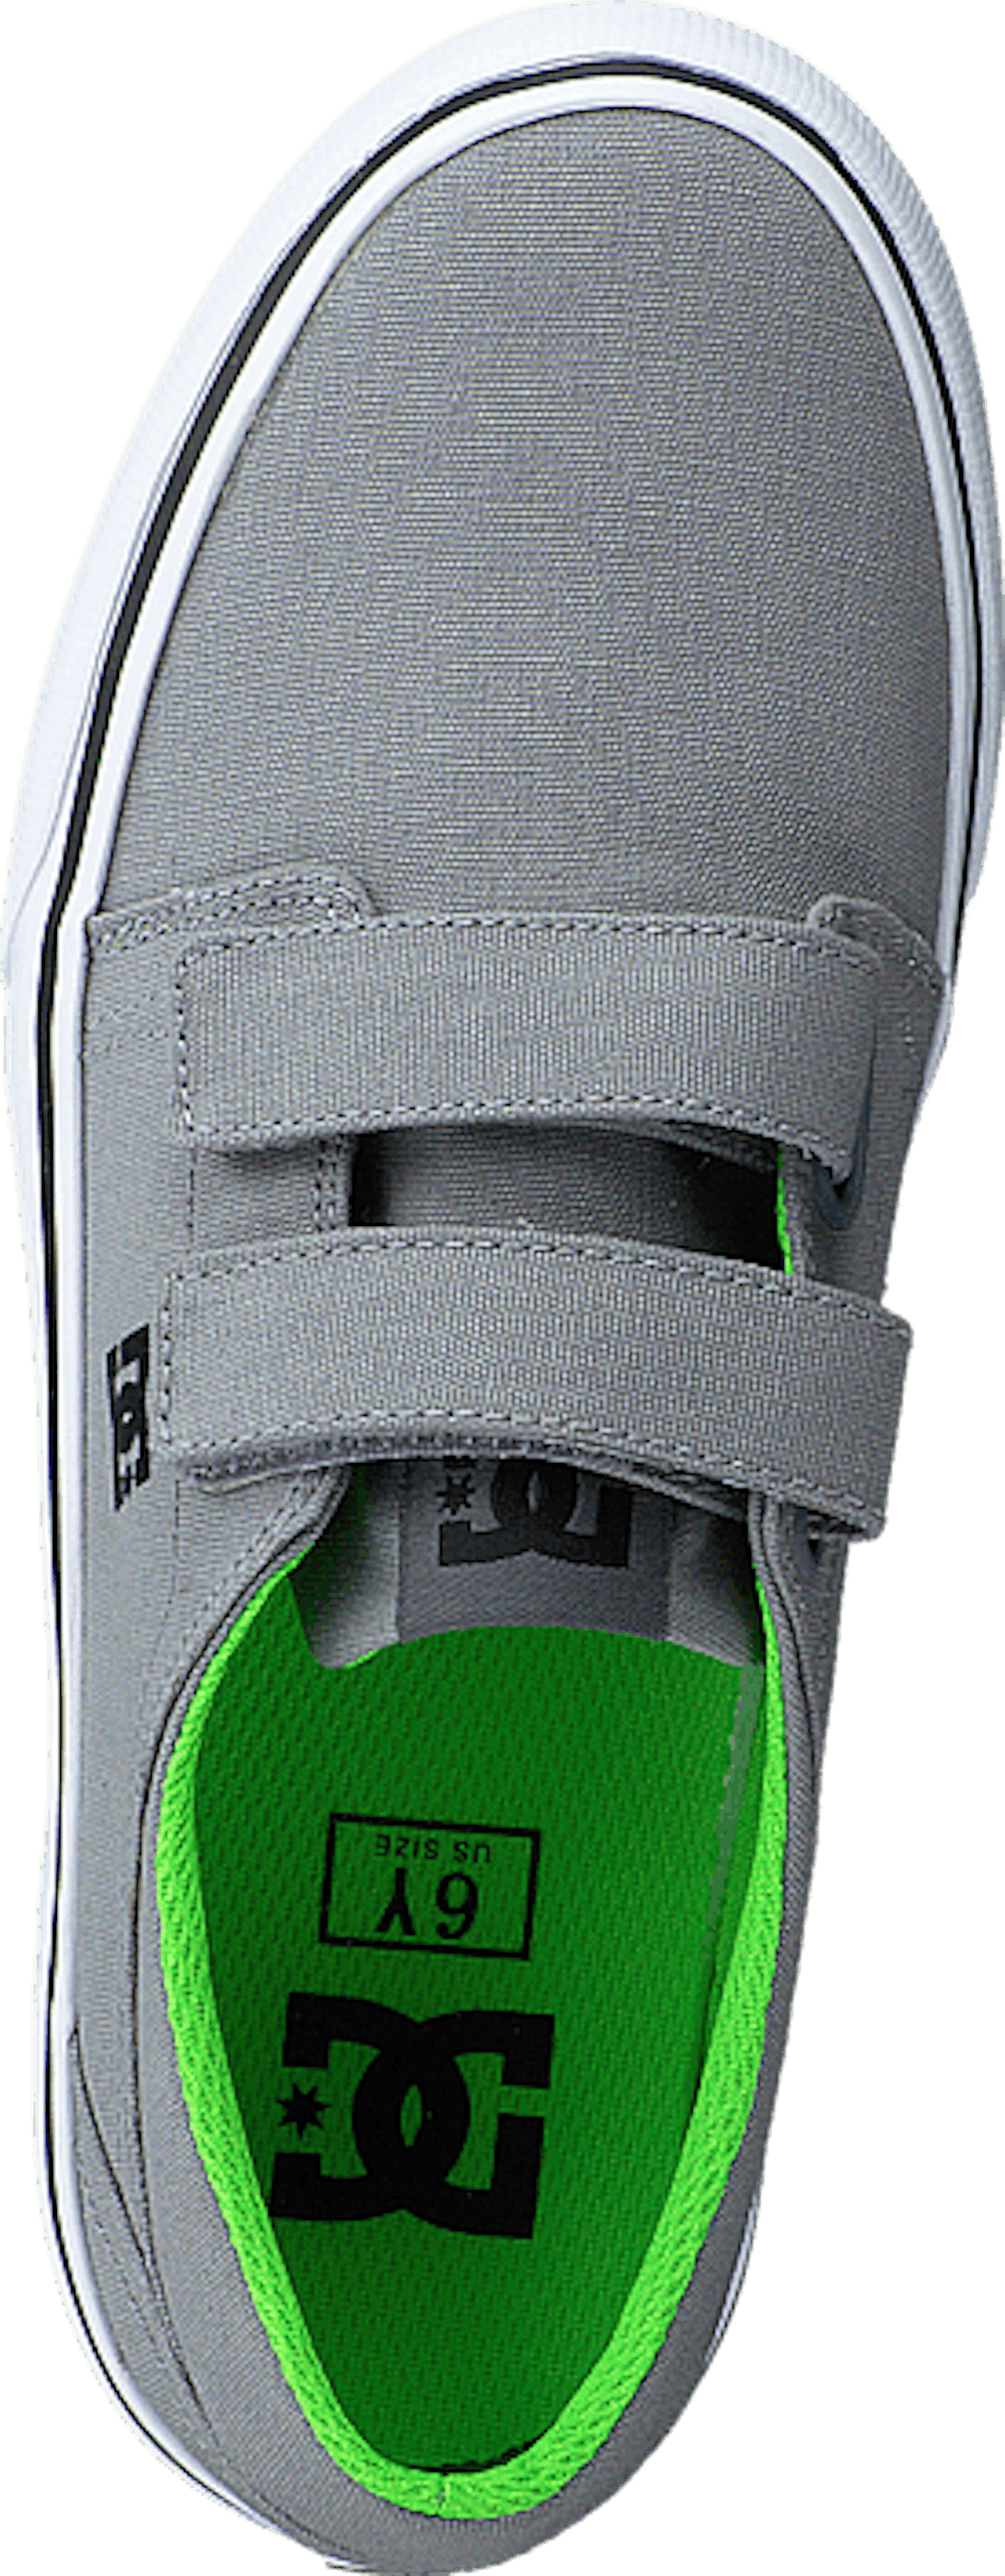 Dc Kids Trase V Shoe Grey/Black/Green